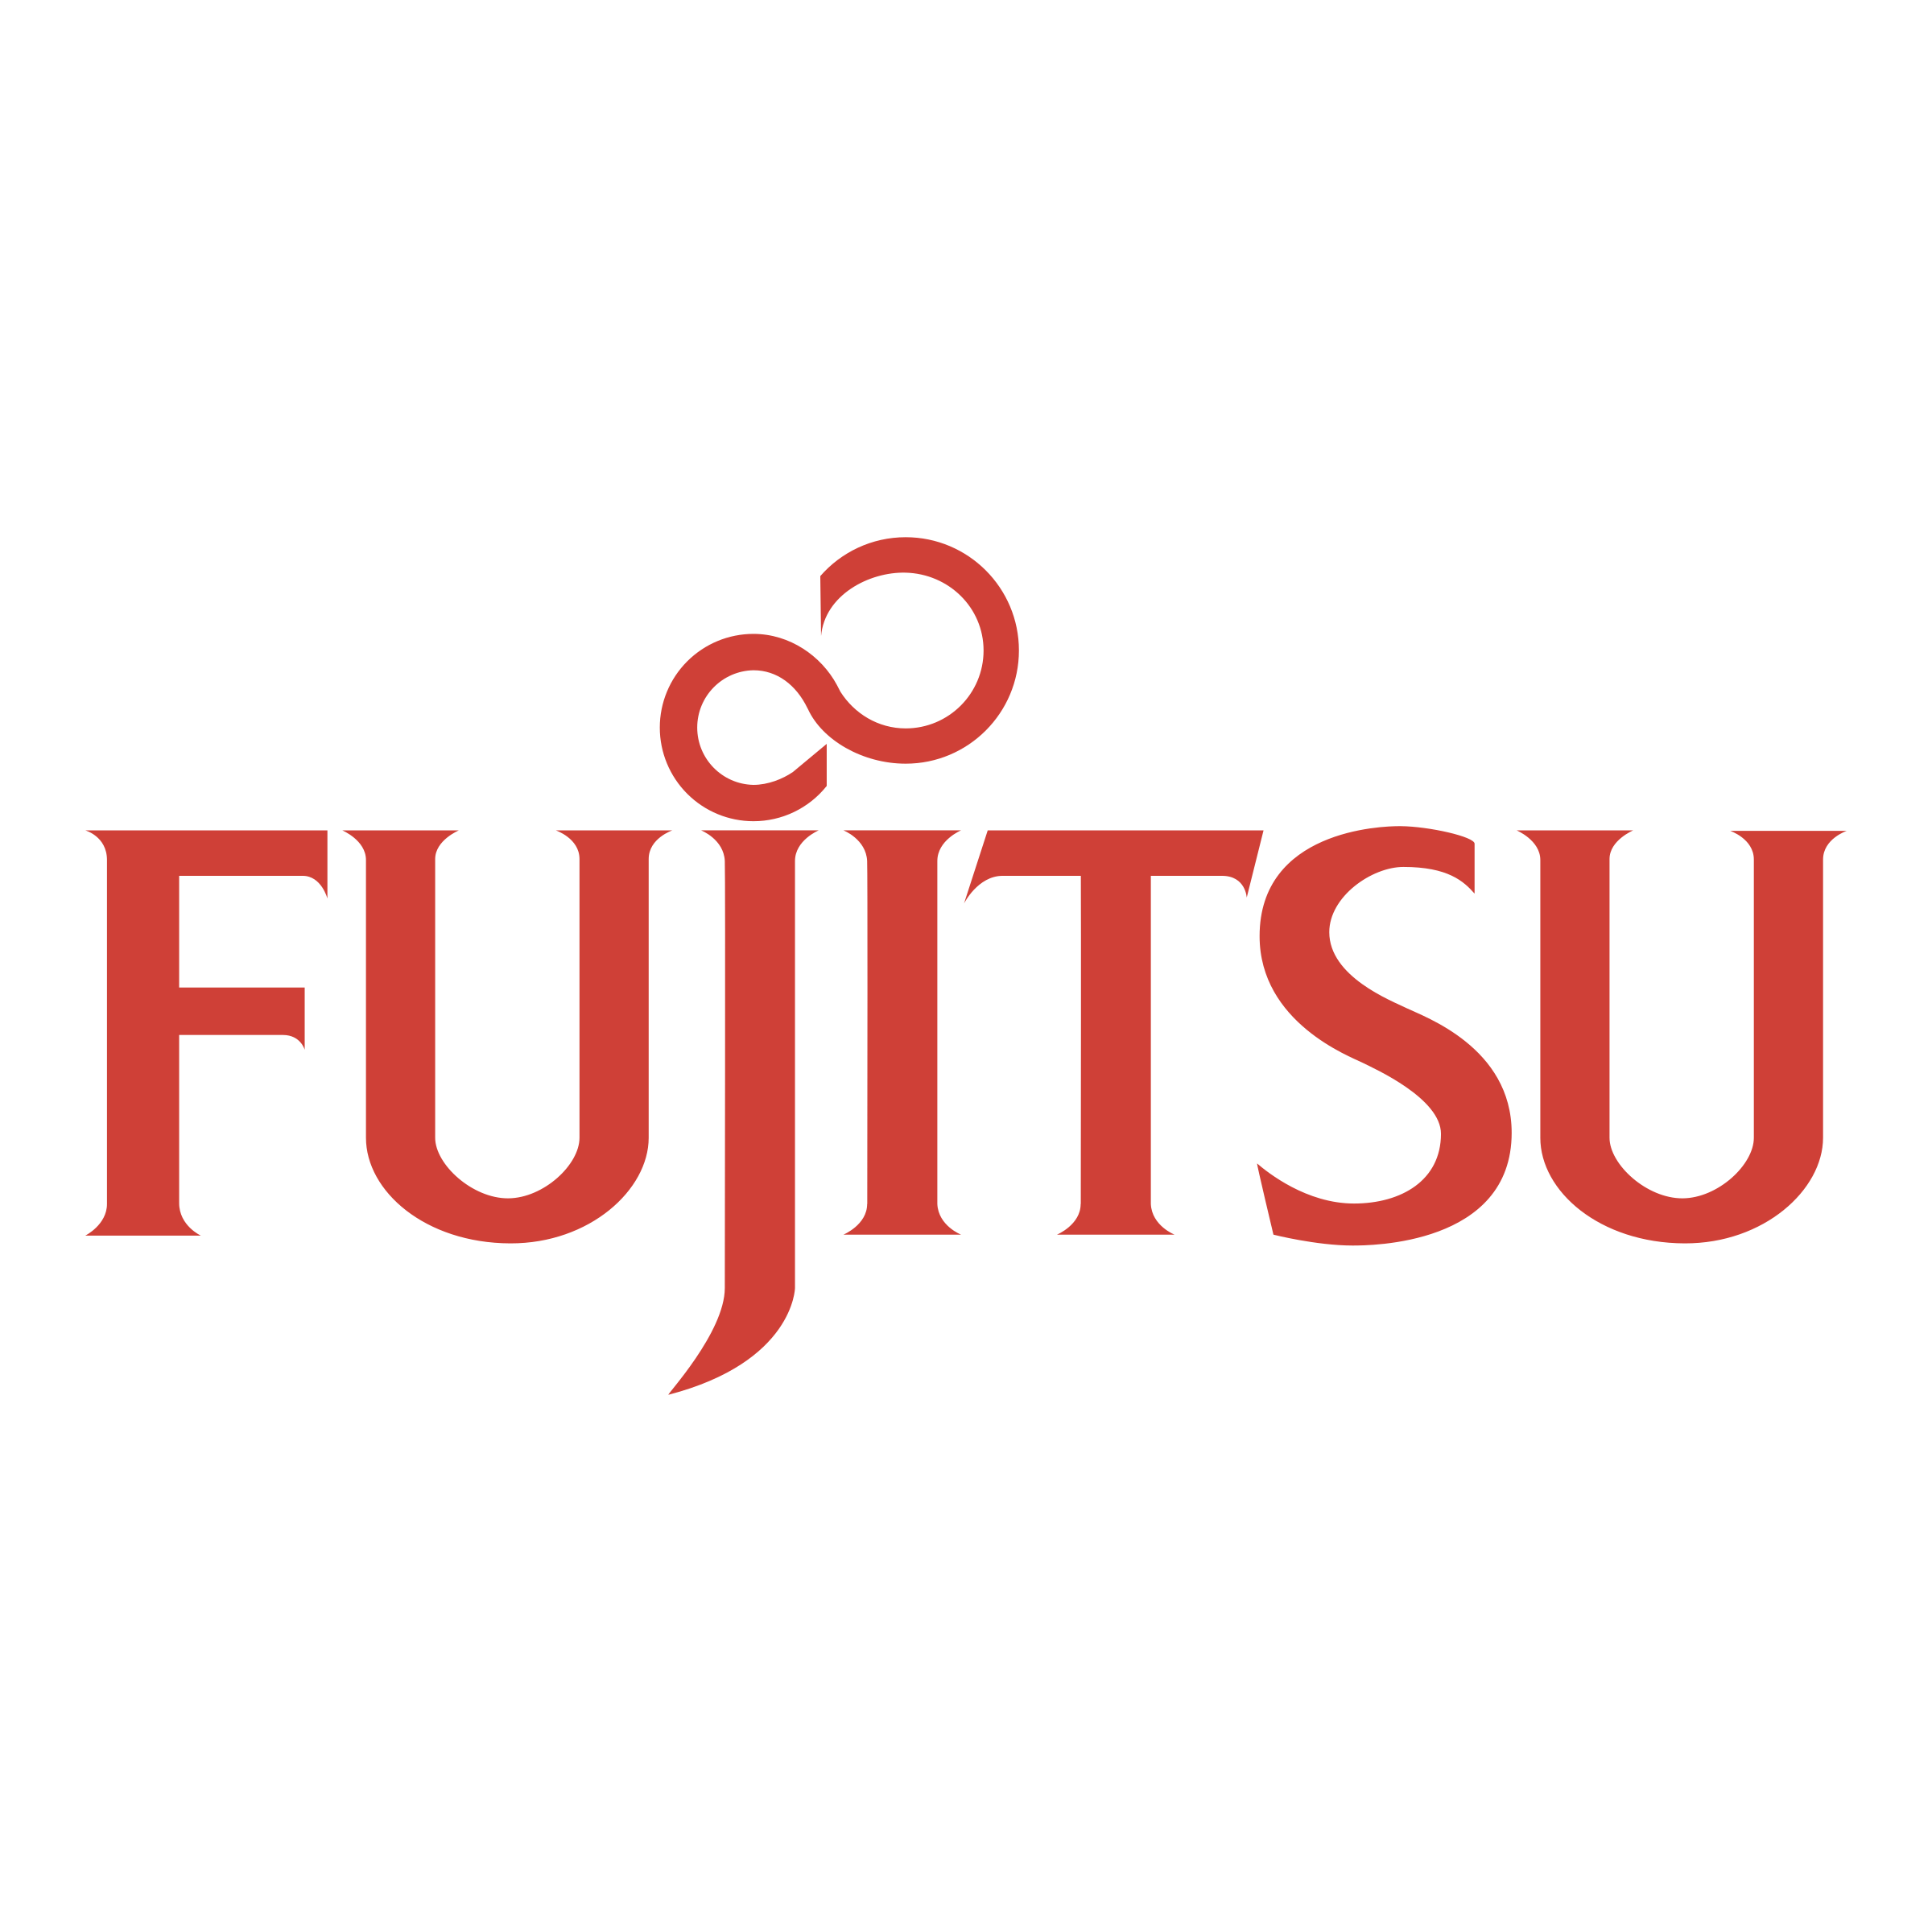 fujitsu-logo-png-transparent